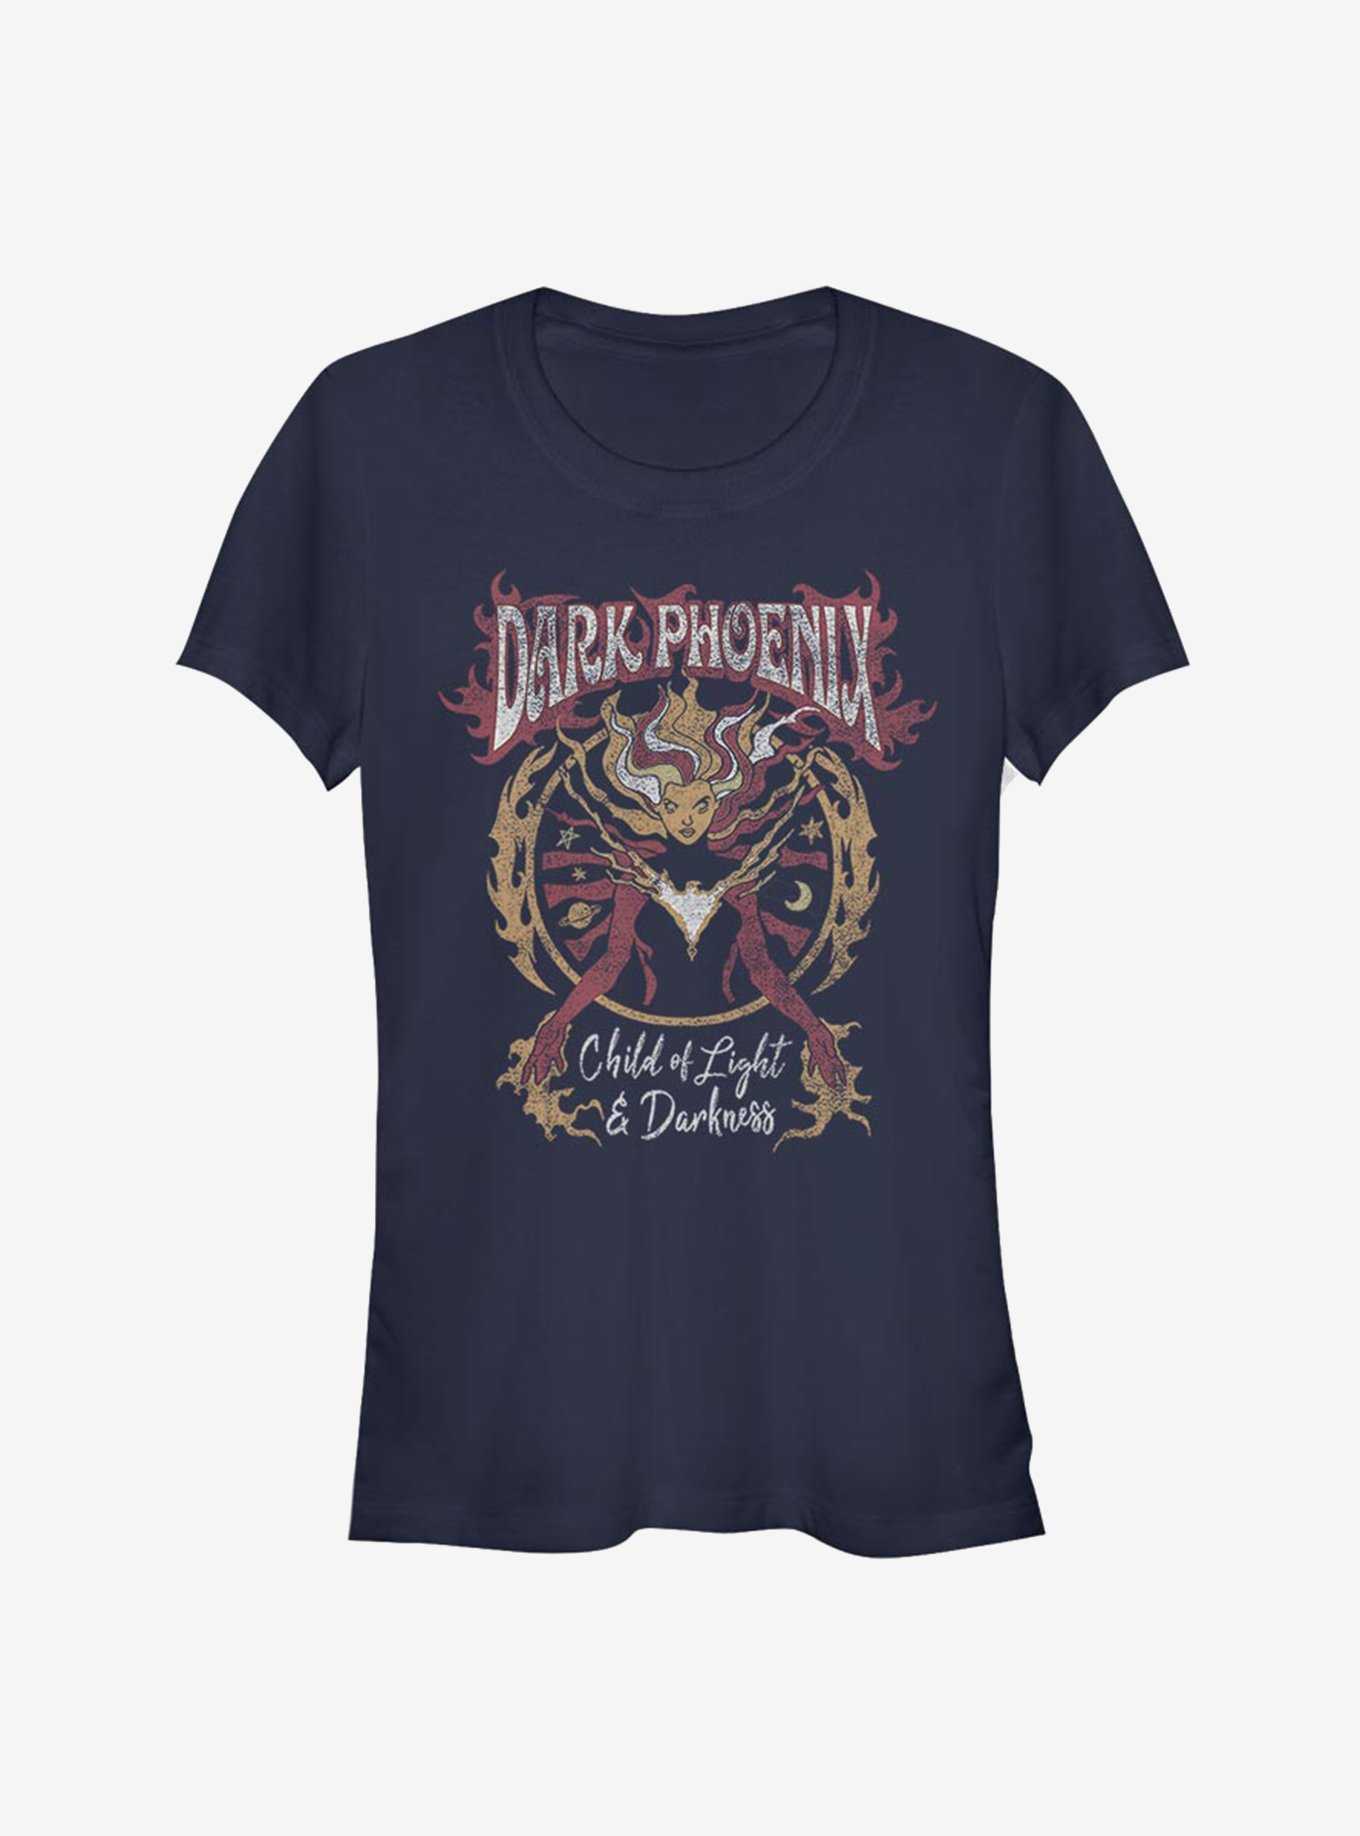 Marvel X-Men Phoenix Phoenix Rising Girls T-Shirt, , hi-res